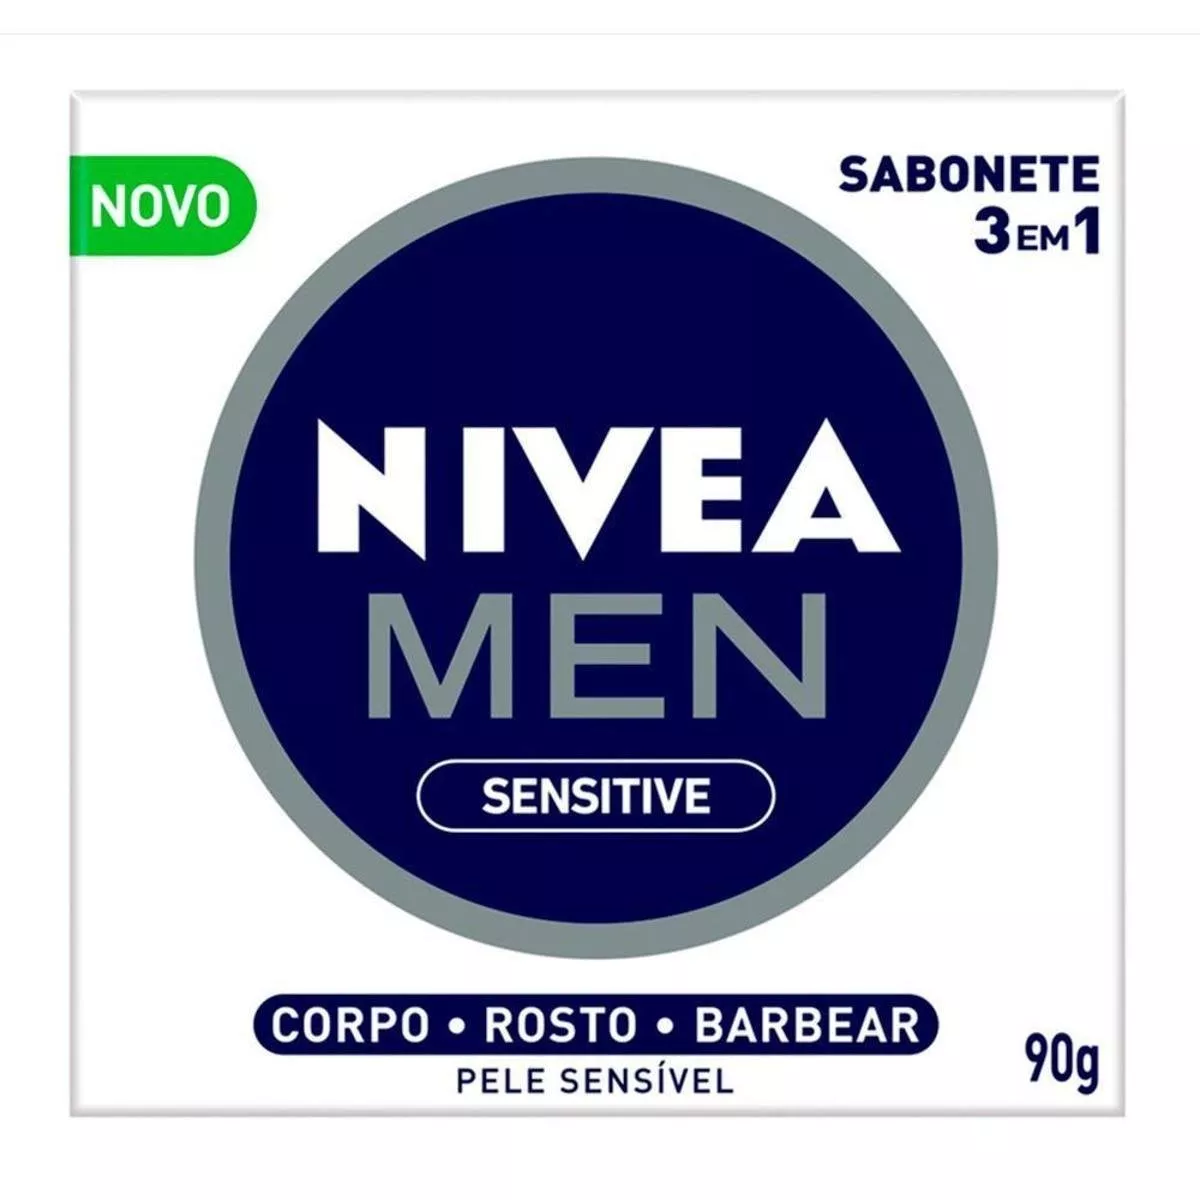 Sabonete Em Barra 3 Em 1 Nvea Men Sensitive 90g